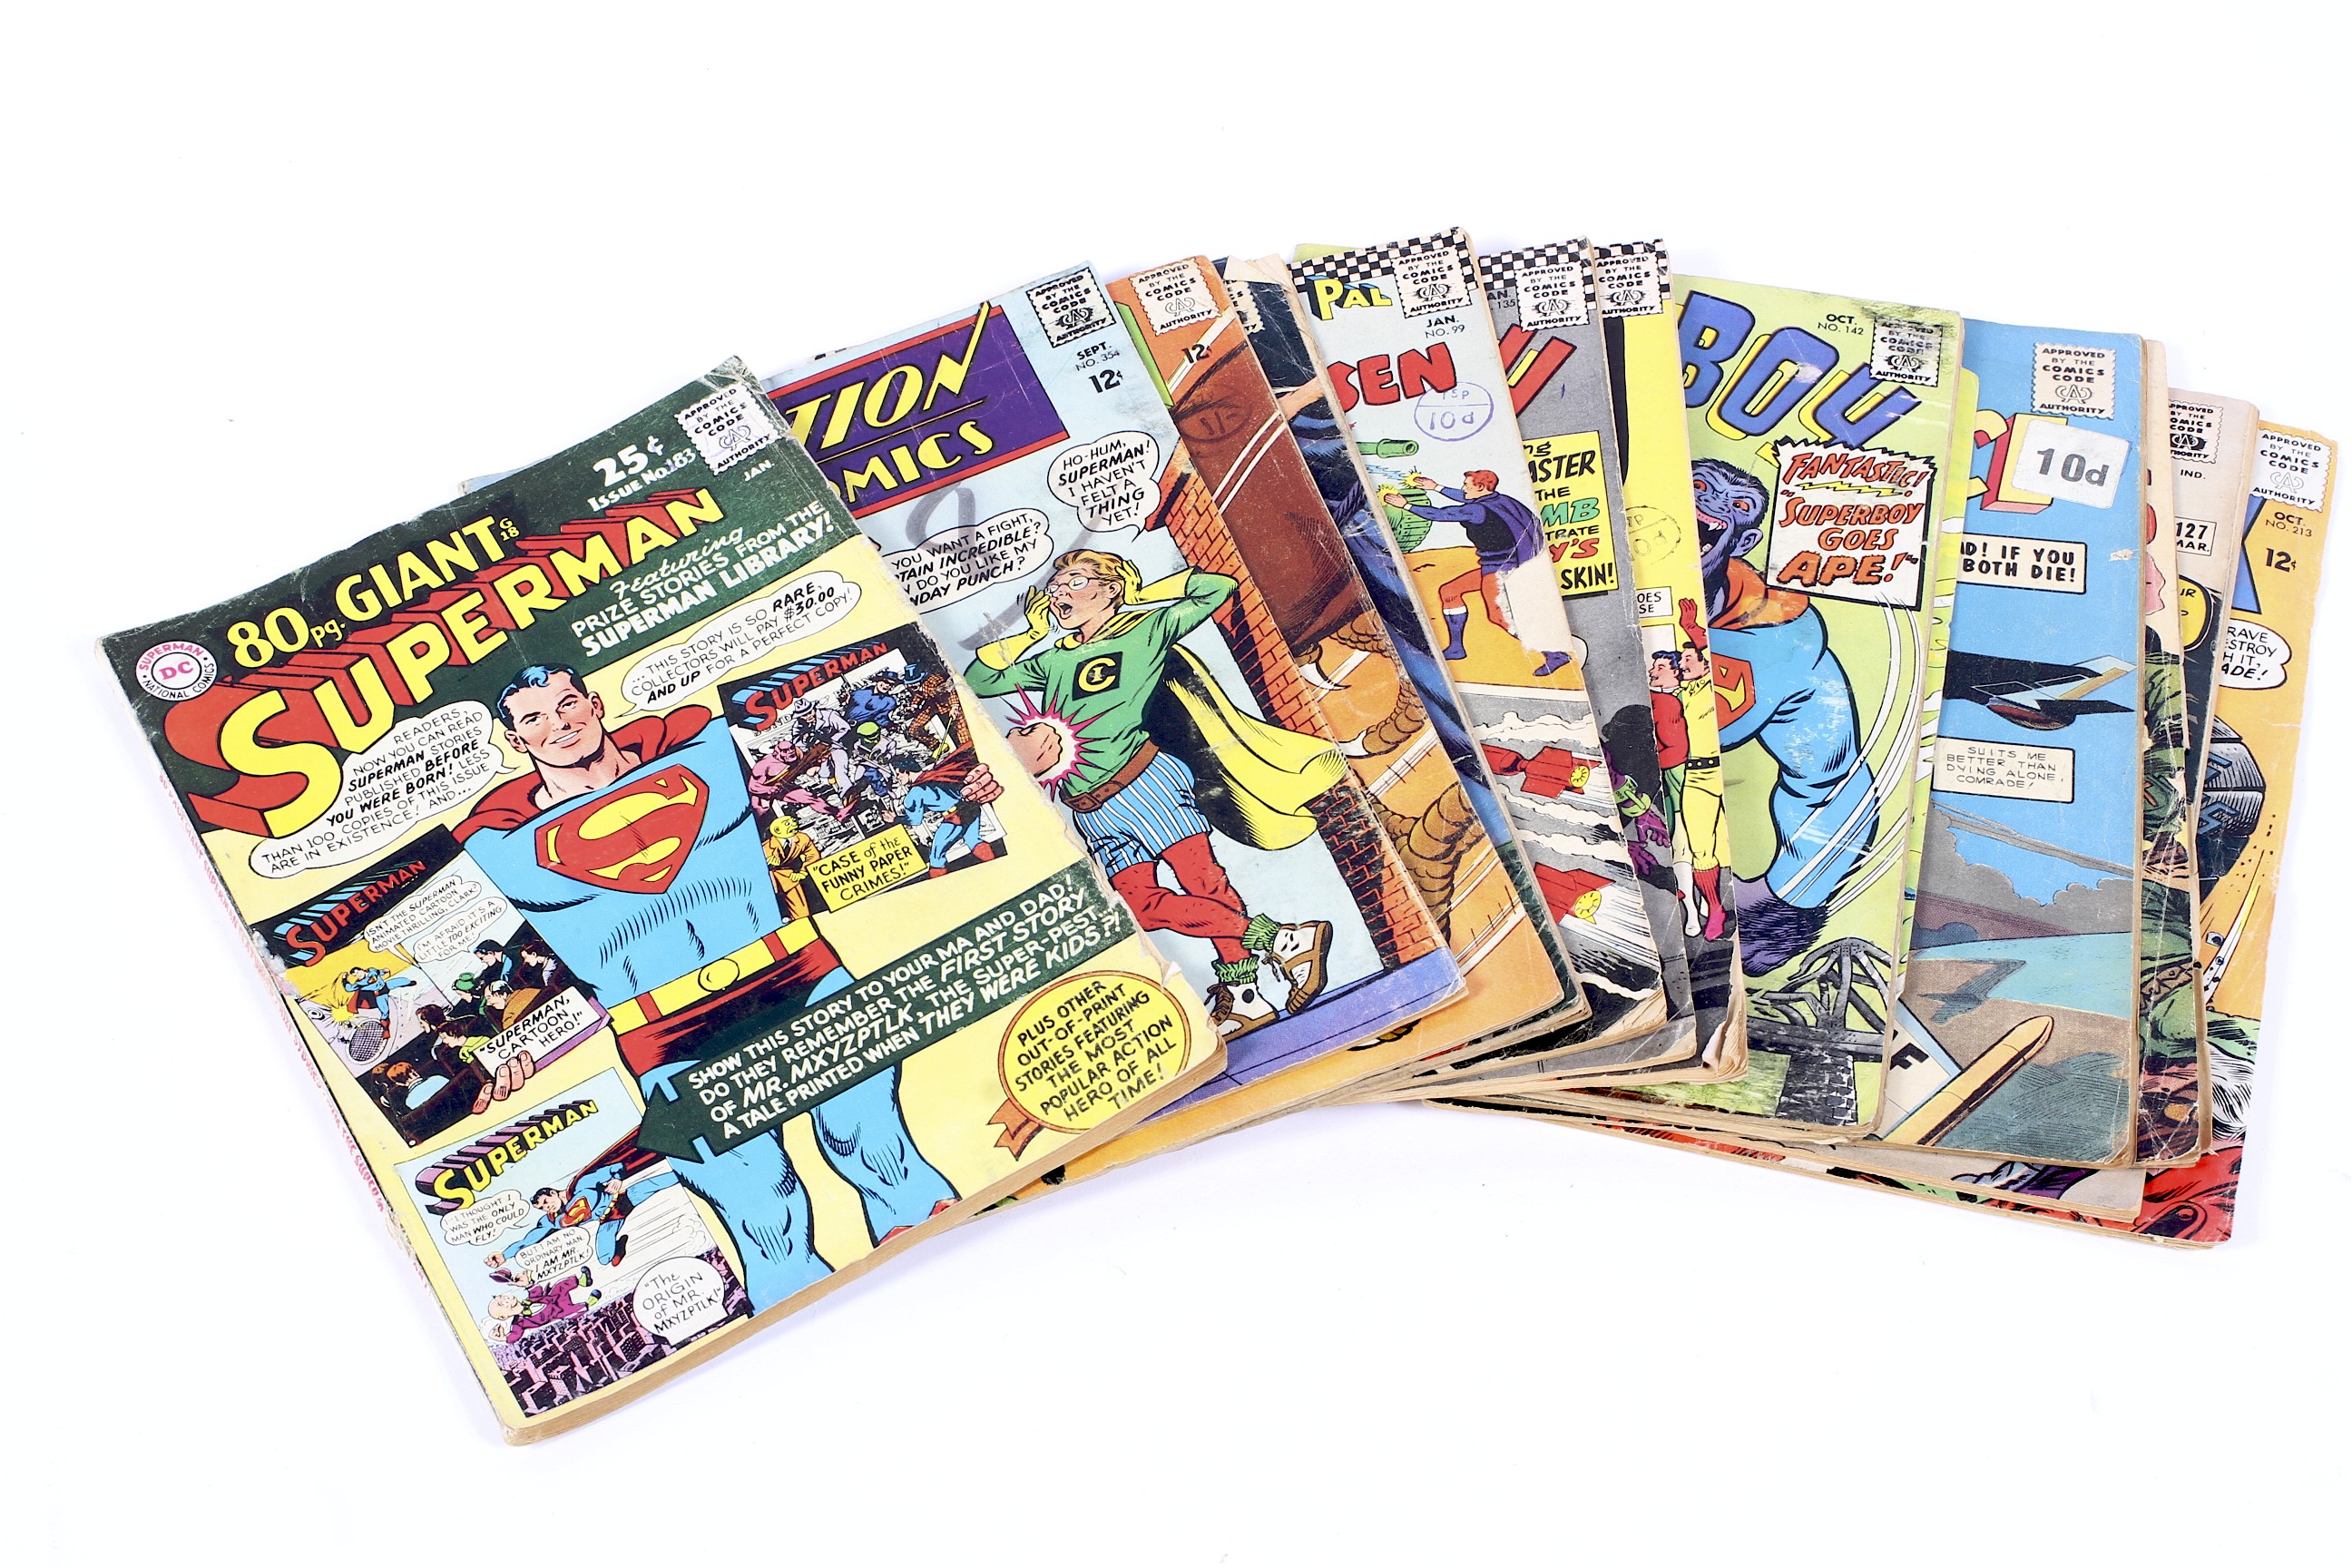 A collection of vintage Superhero comics,